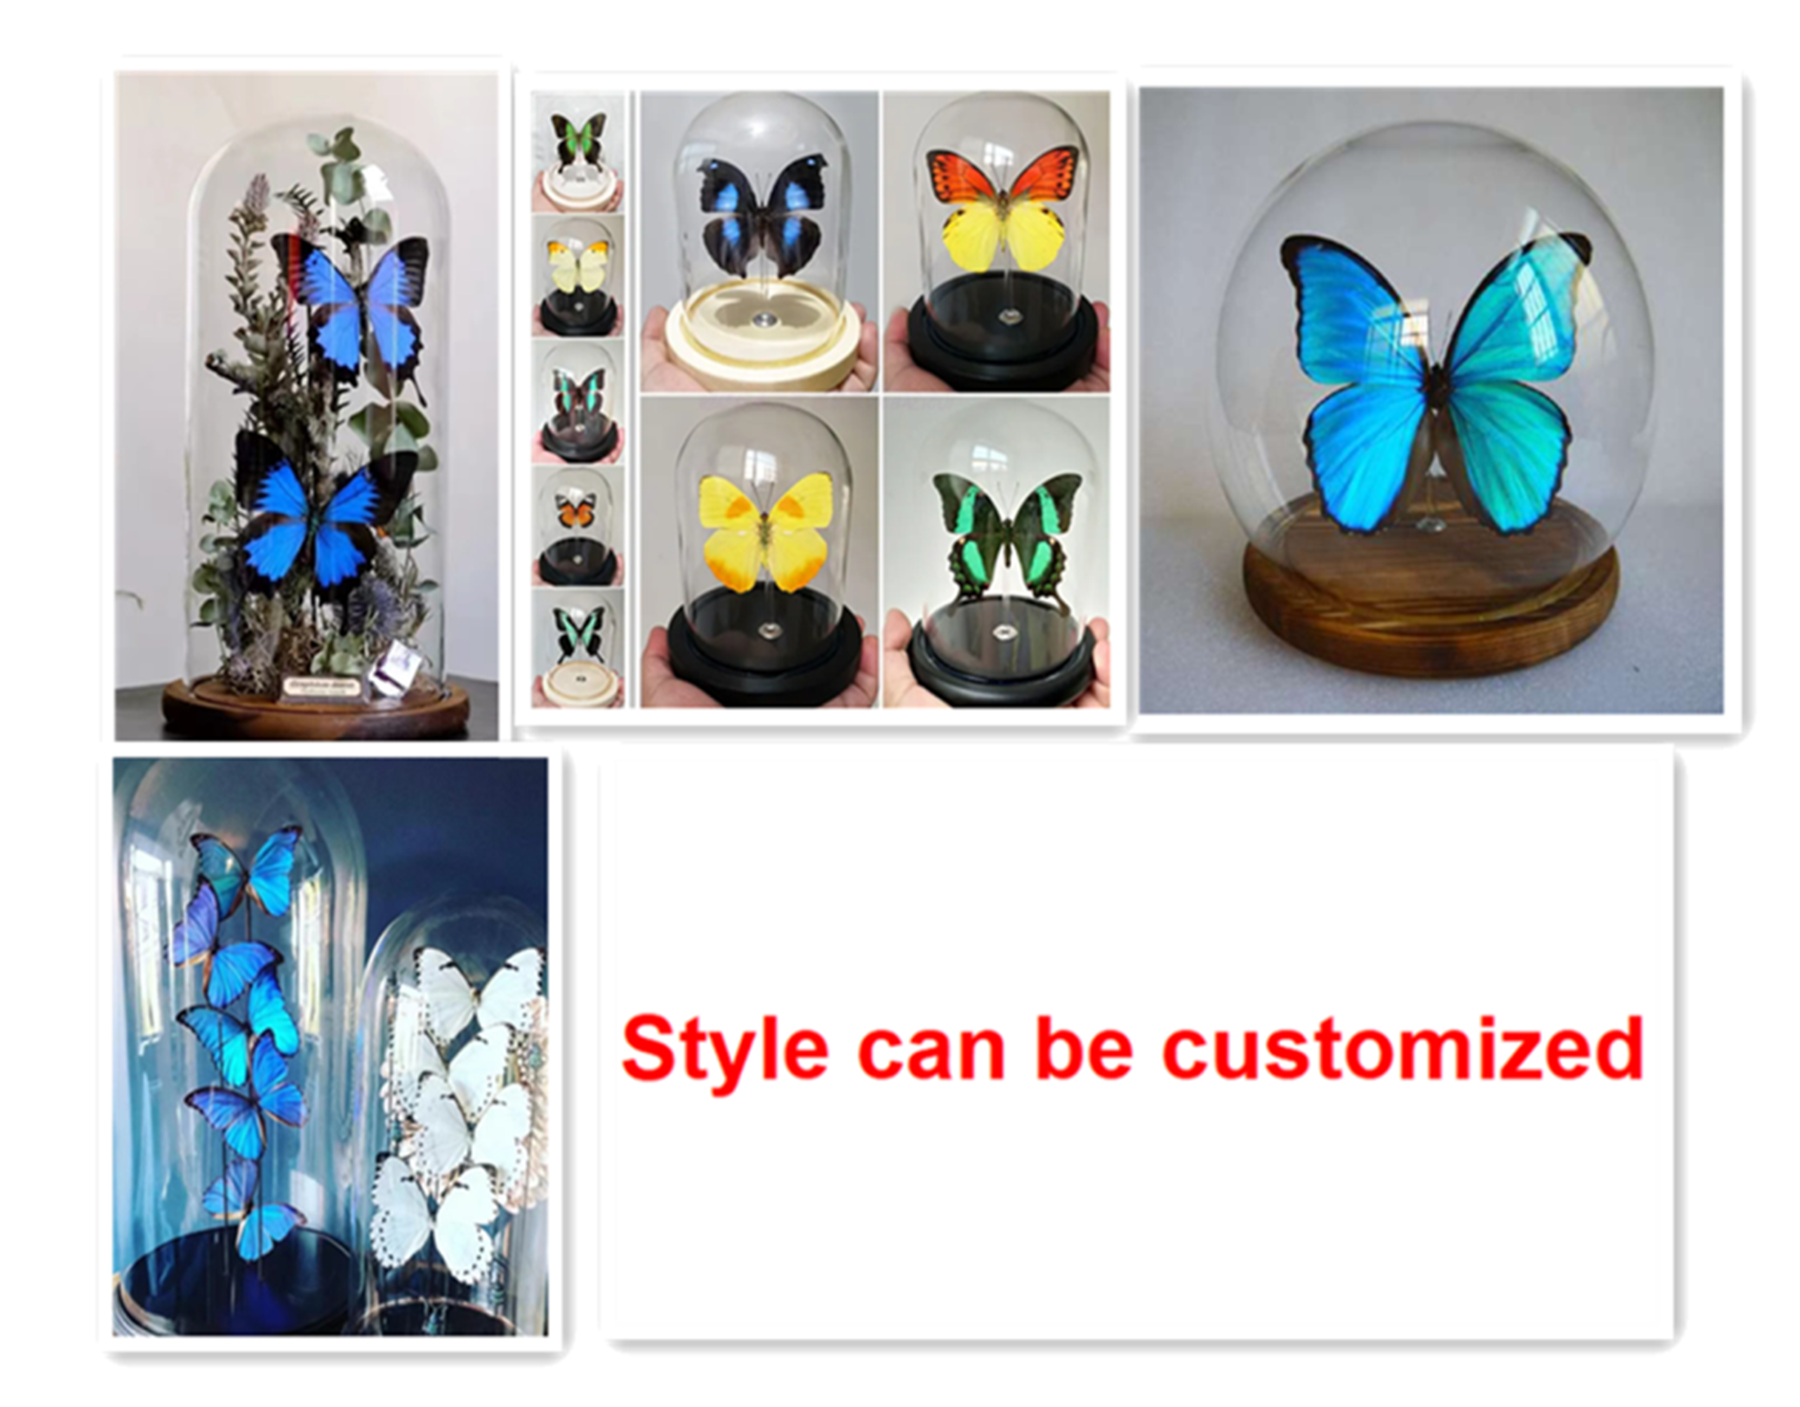 Parnassius Epaphus Butterfly Suppliers & Wholesalers - CF Butterfly